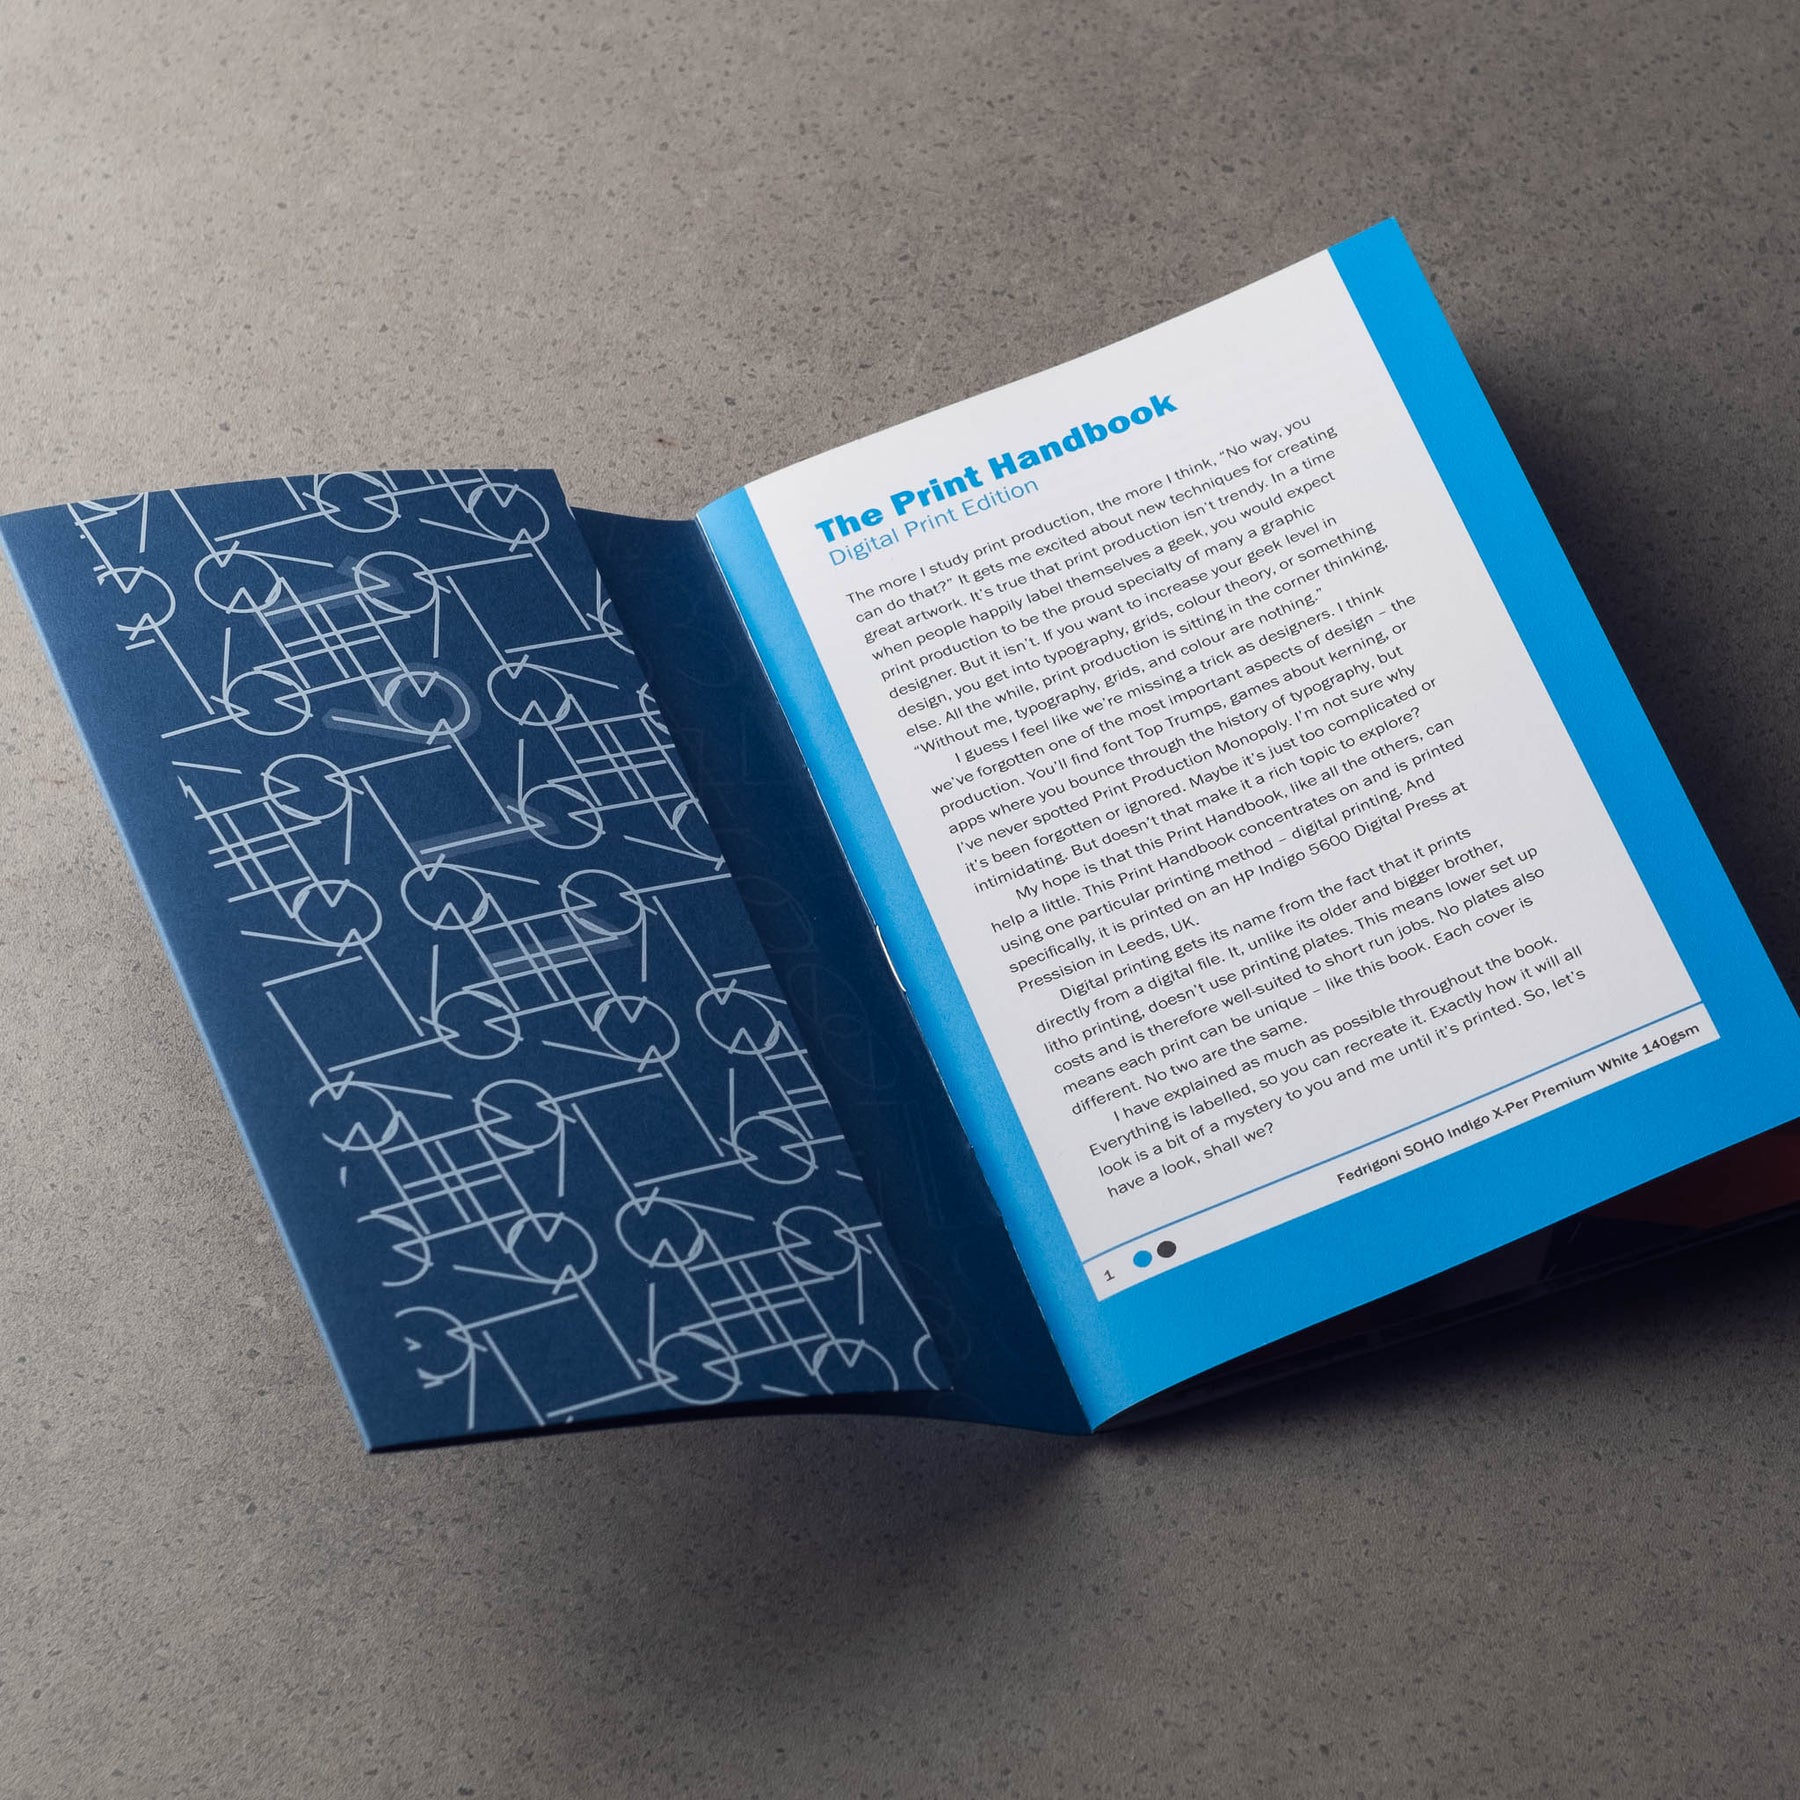 The Digital Print Handbook